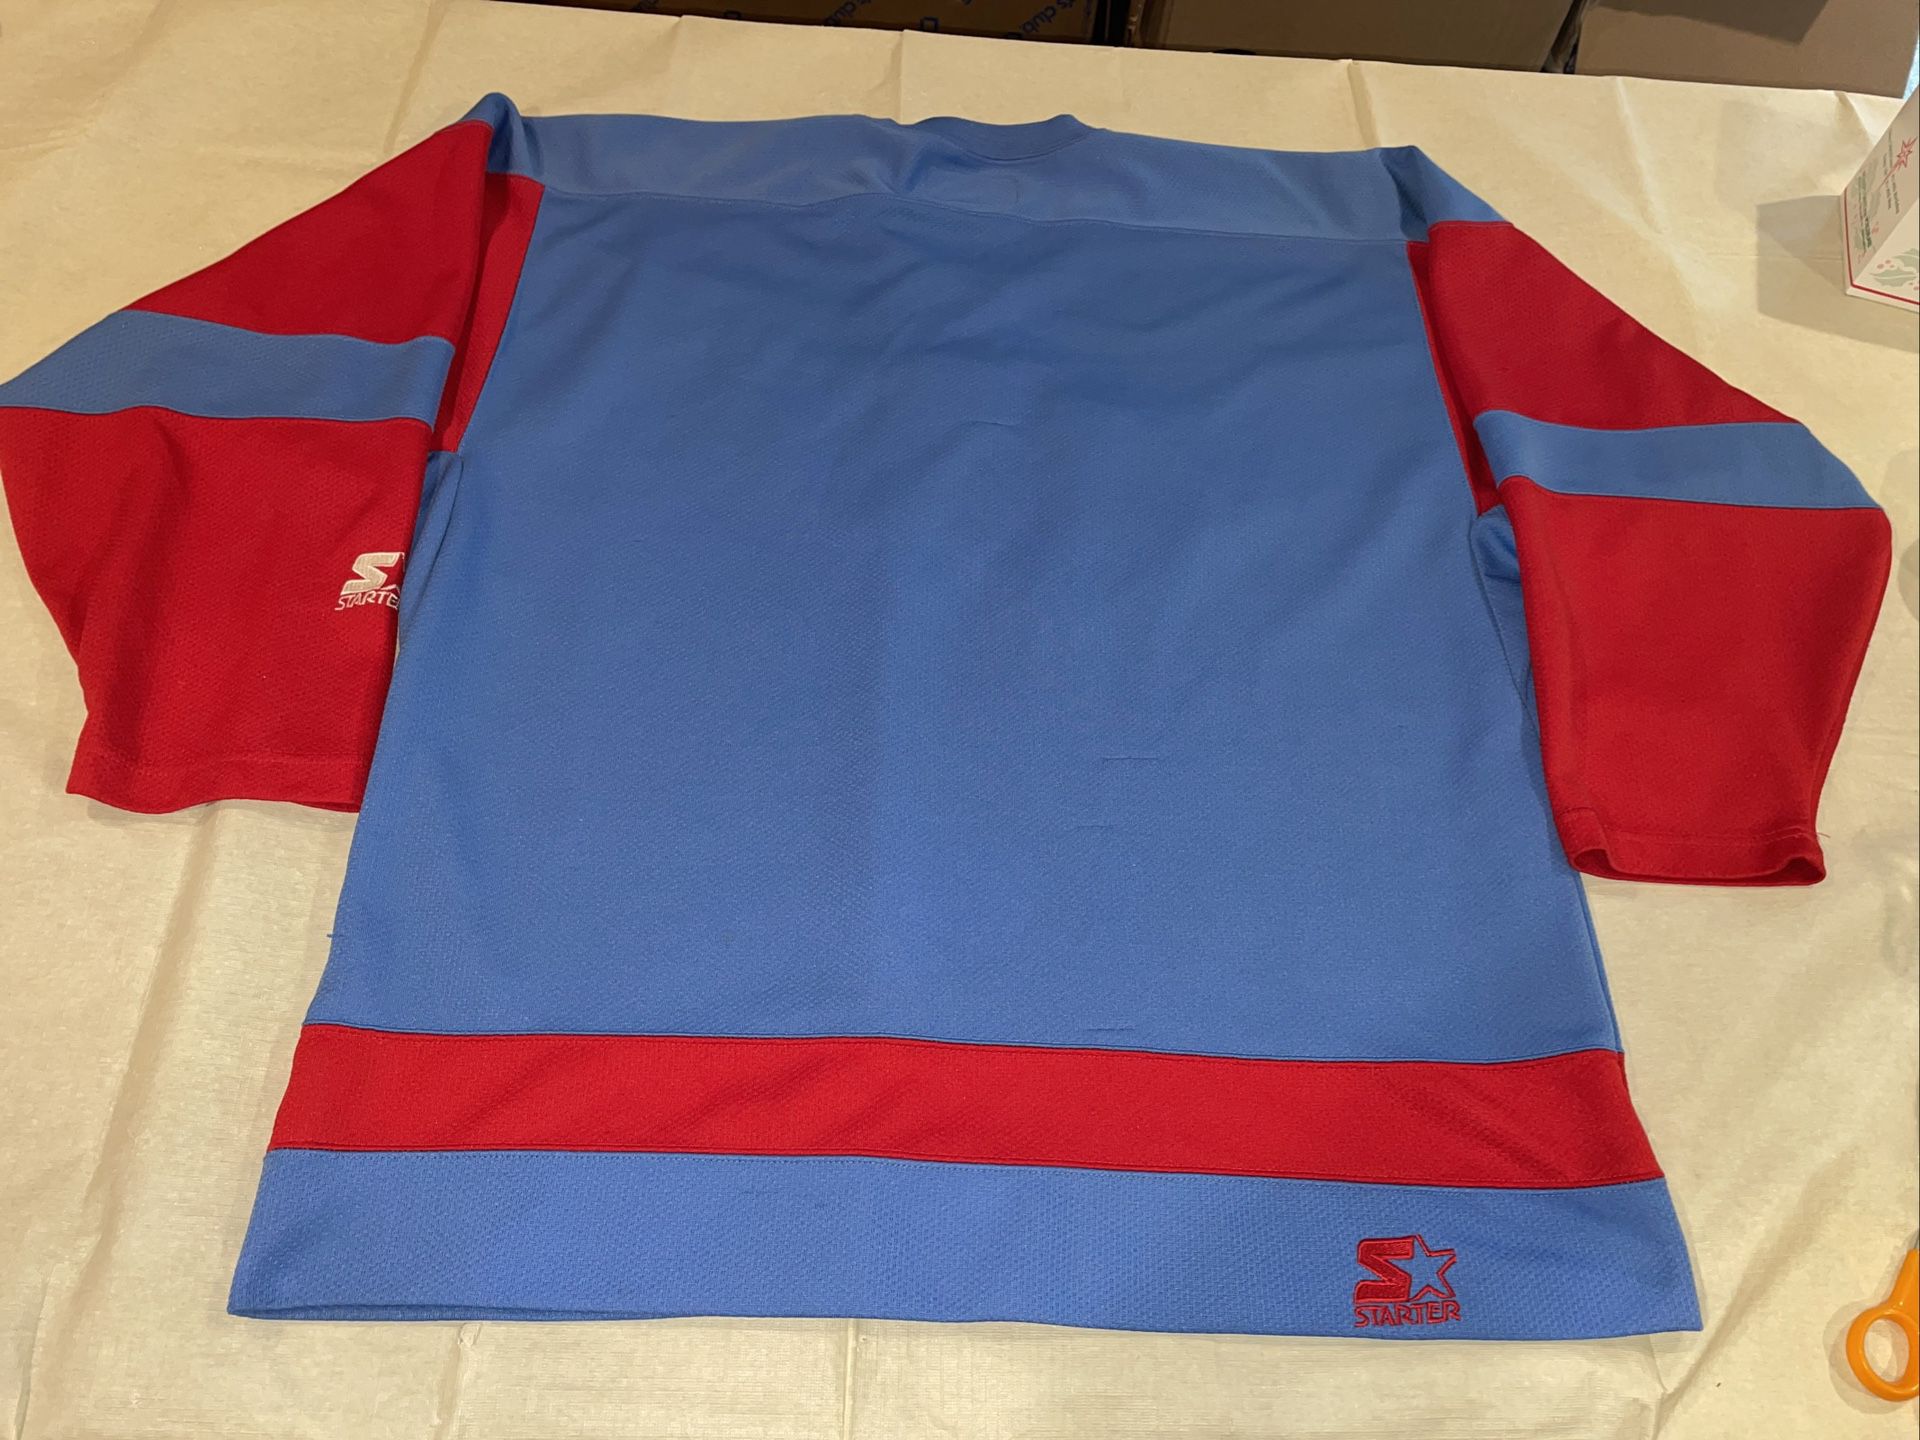 Xtreme Basics Yth L/XL Dark Blue Red Hockey Jersey - Youth Large XLarge used